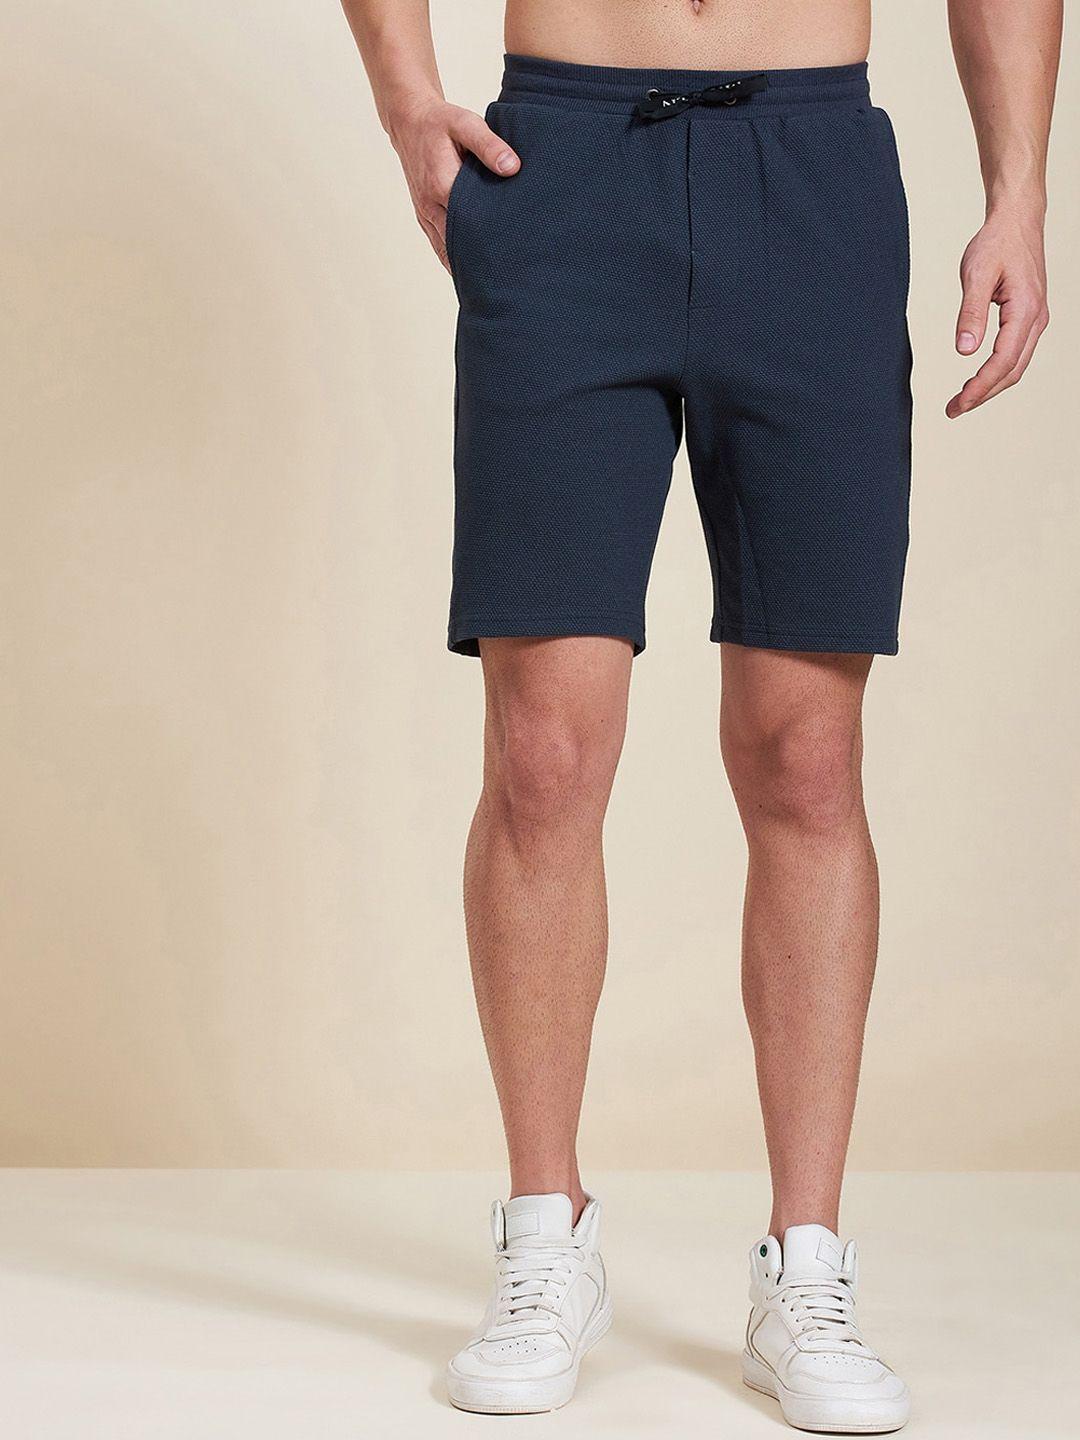 mascln sassafras men navy blue high-rise sports shorts